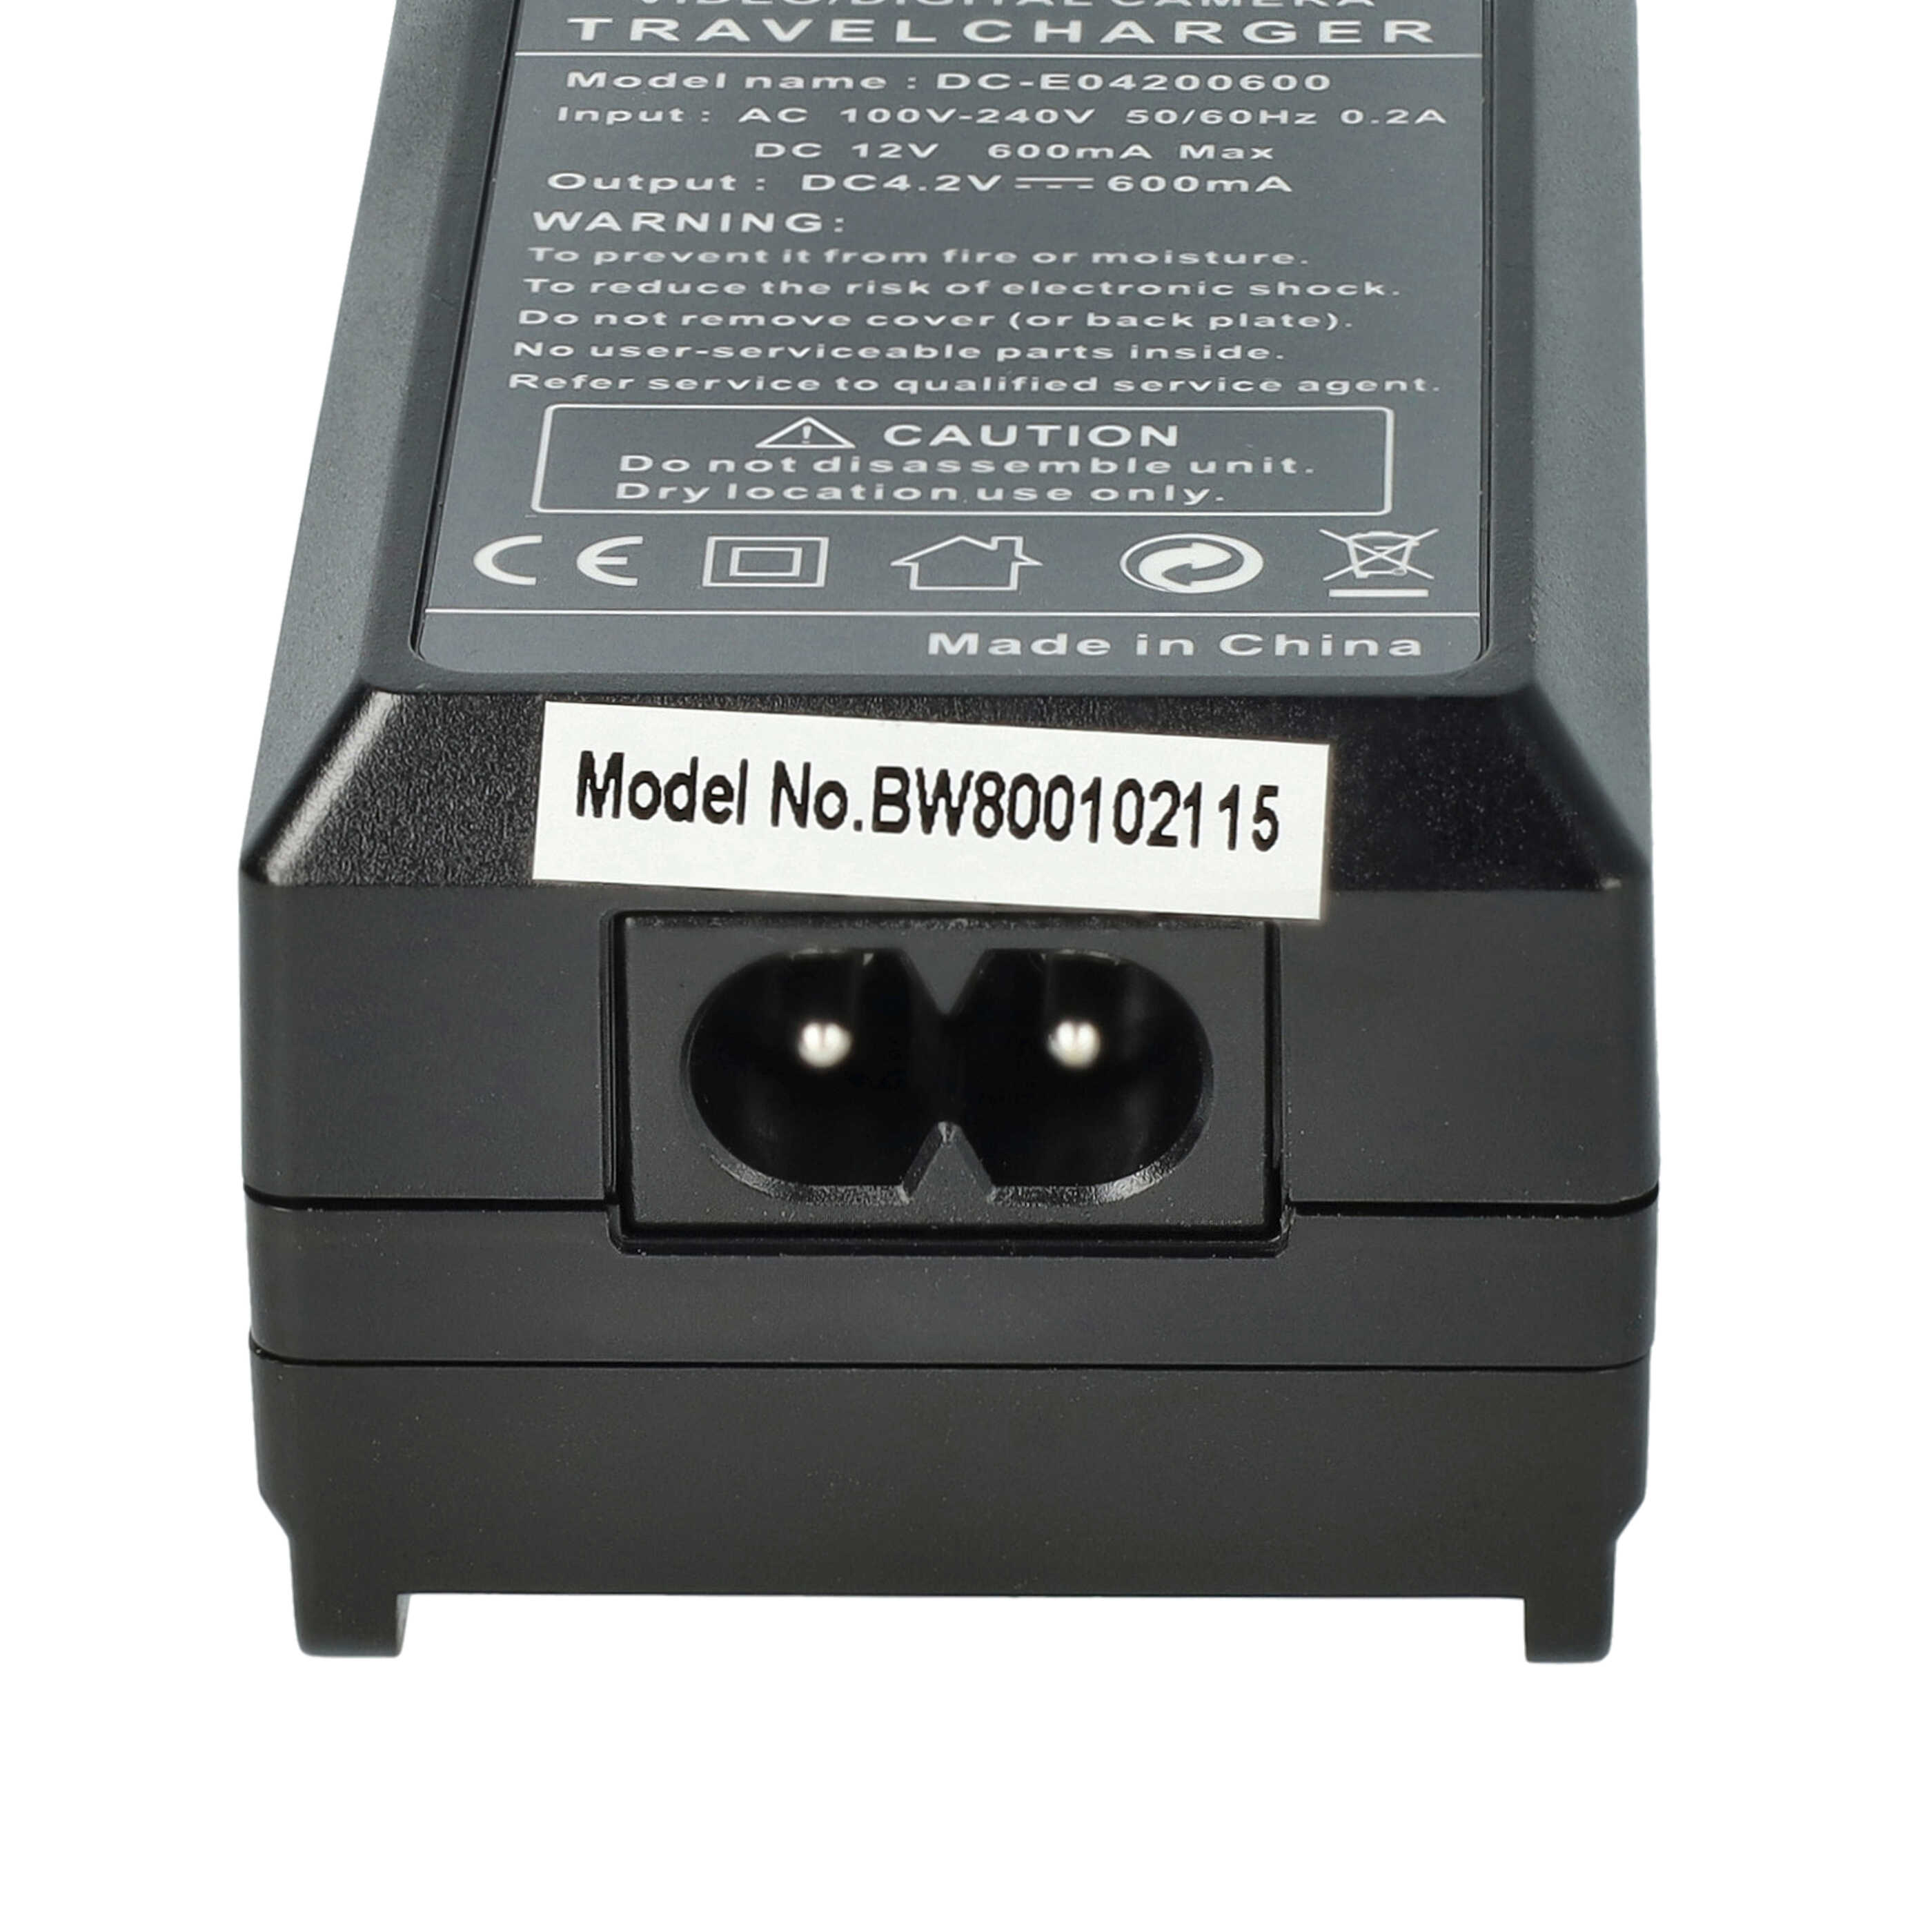 Battery Charger suitable for Everio GZ-V500 Camera etc. - 0.6 A, 4.2 V